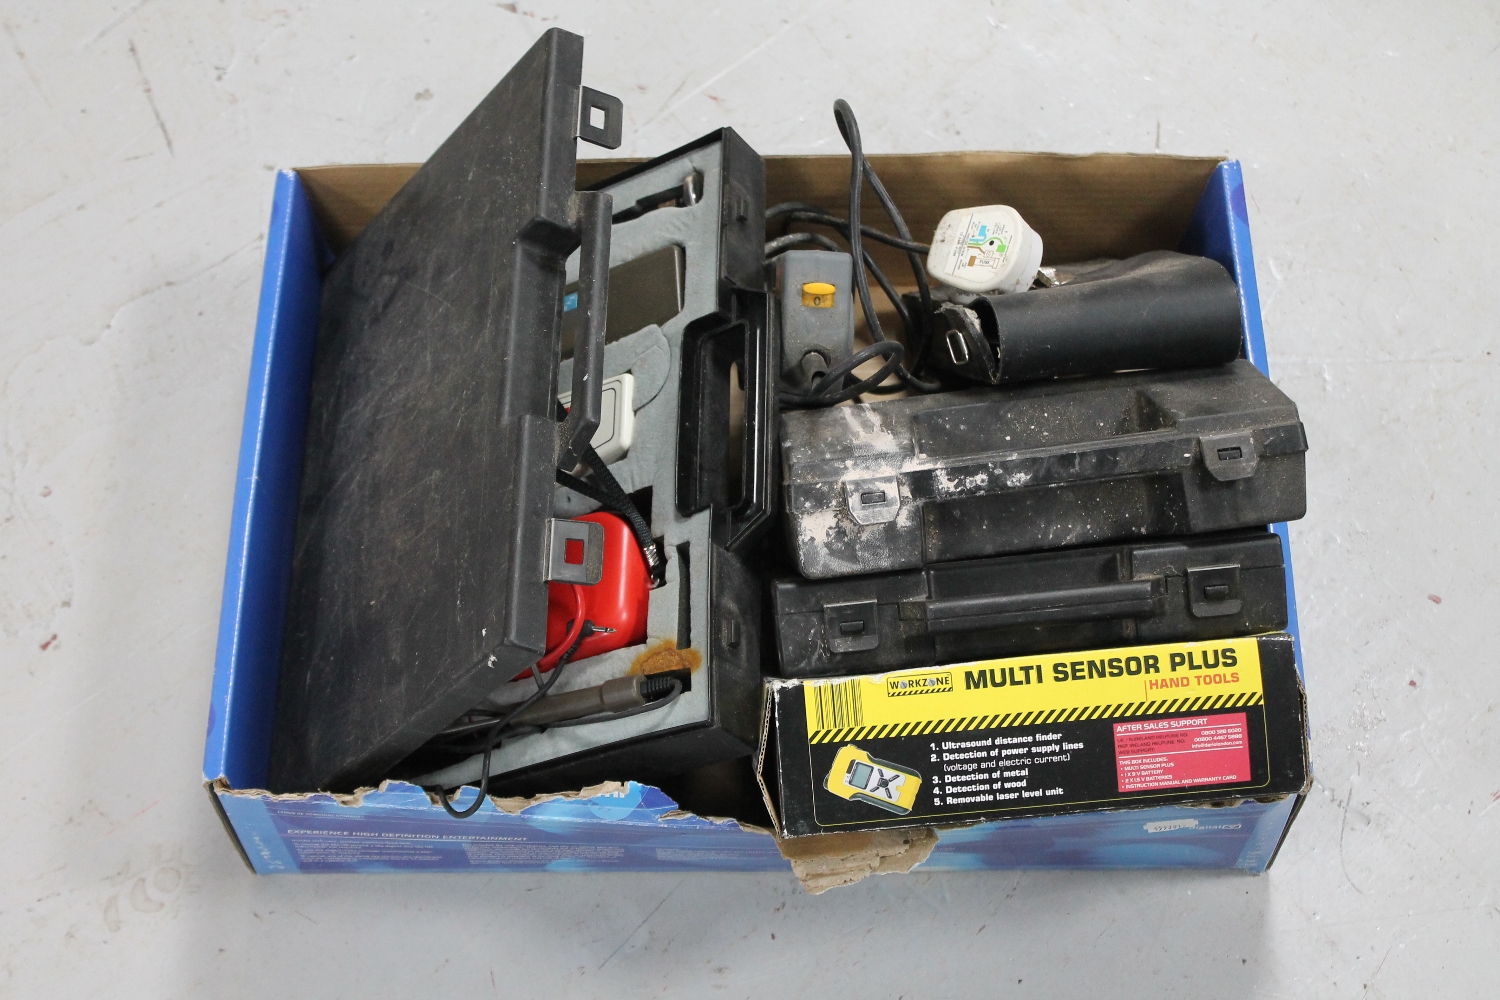 A box of electrical testing kits